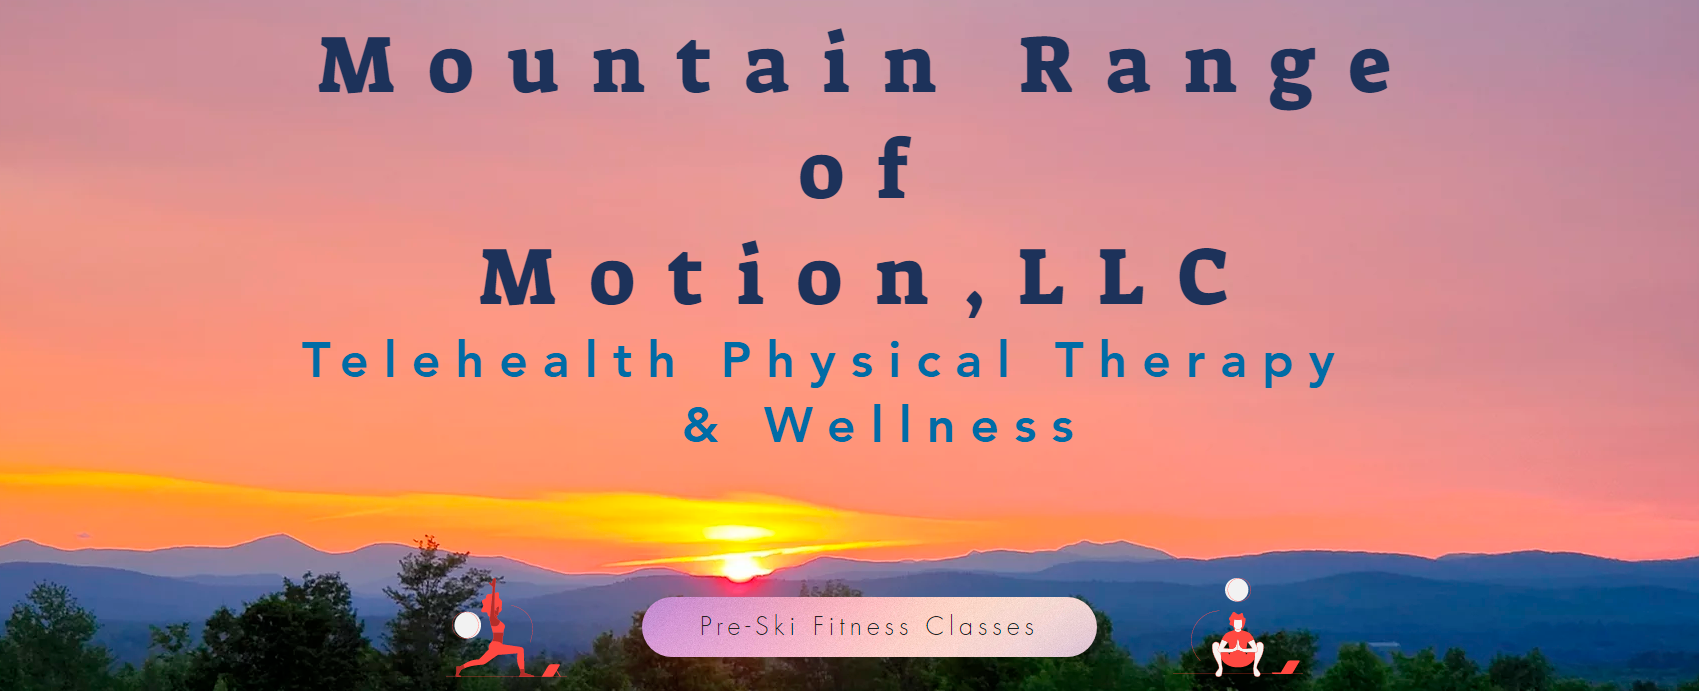 Mountain Range of Motion